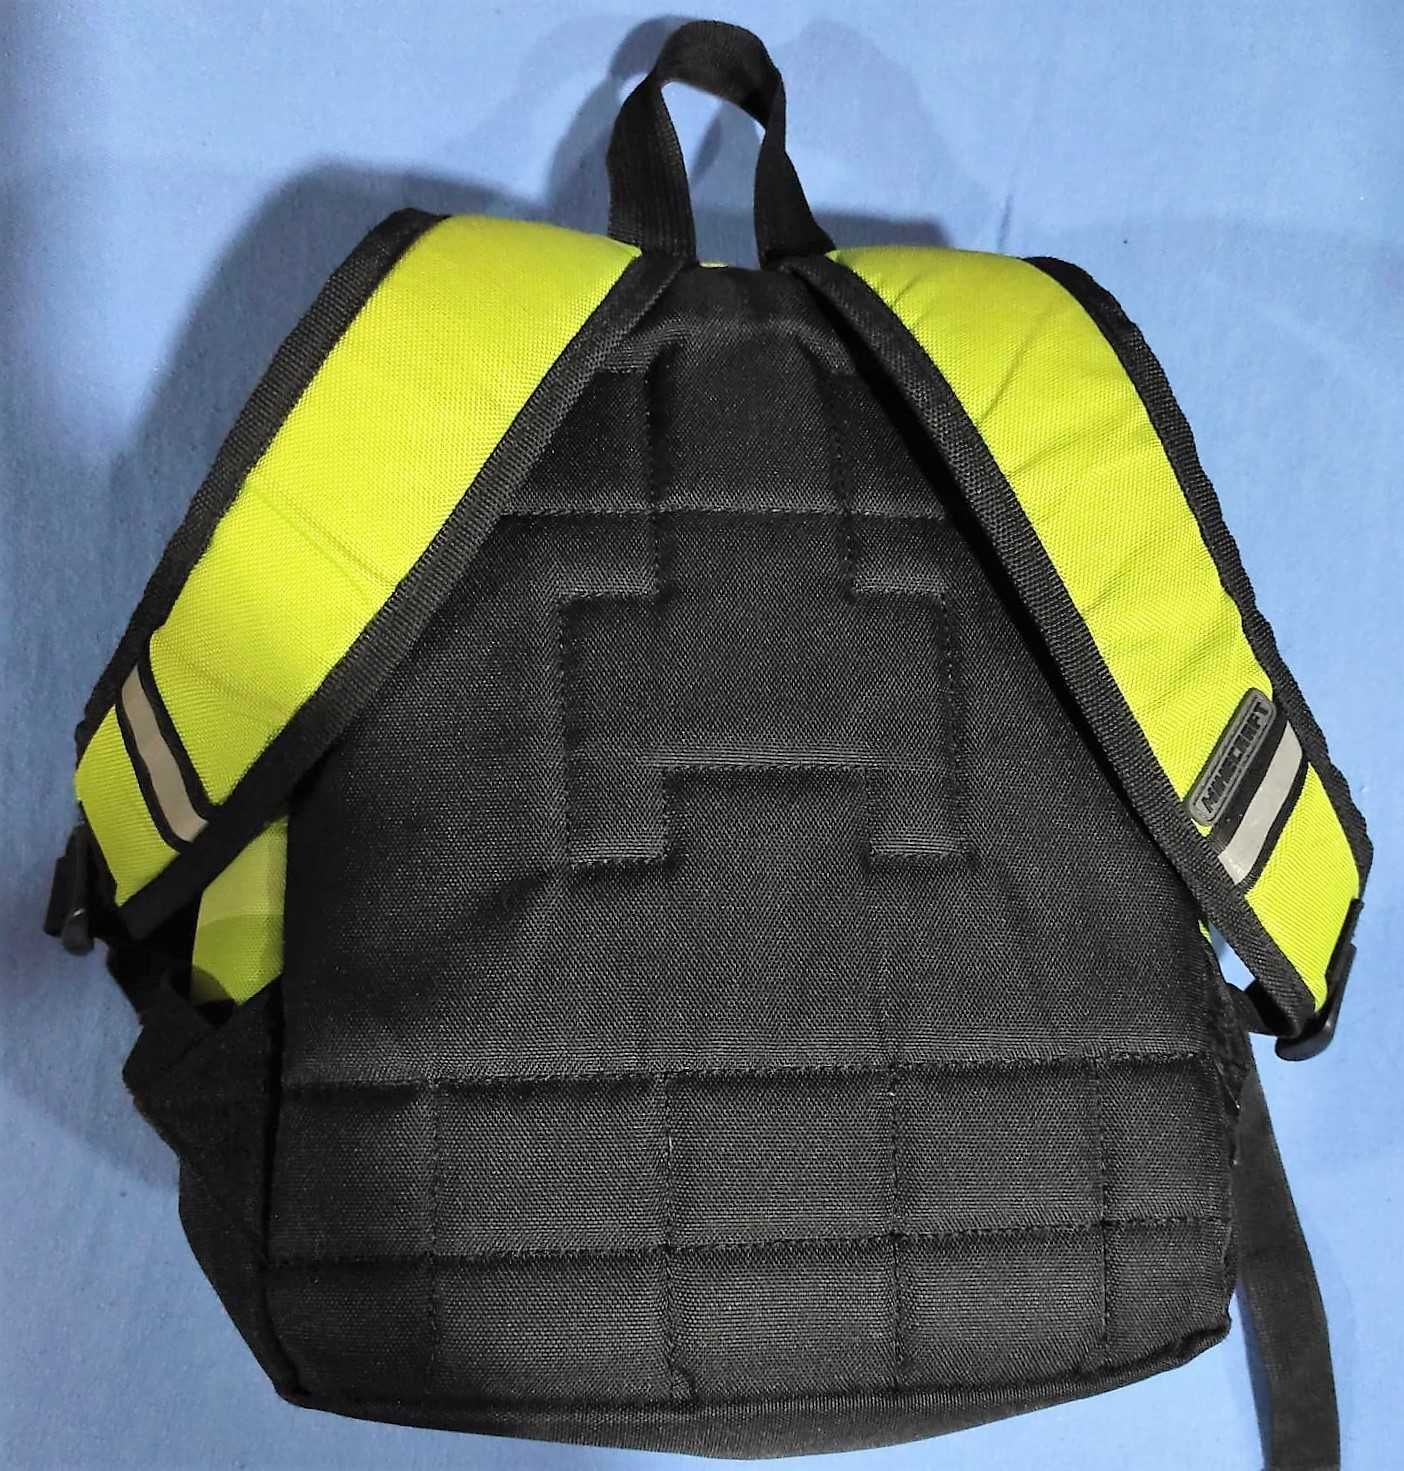 Super plecak minecraft oryginalny na licencji Mojang